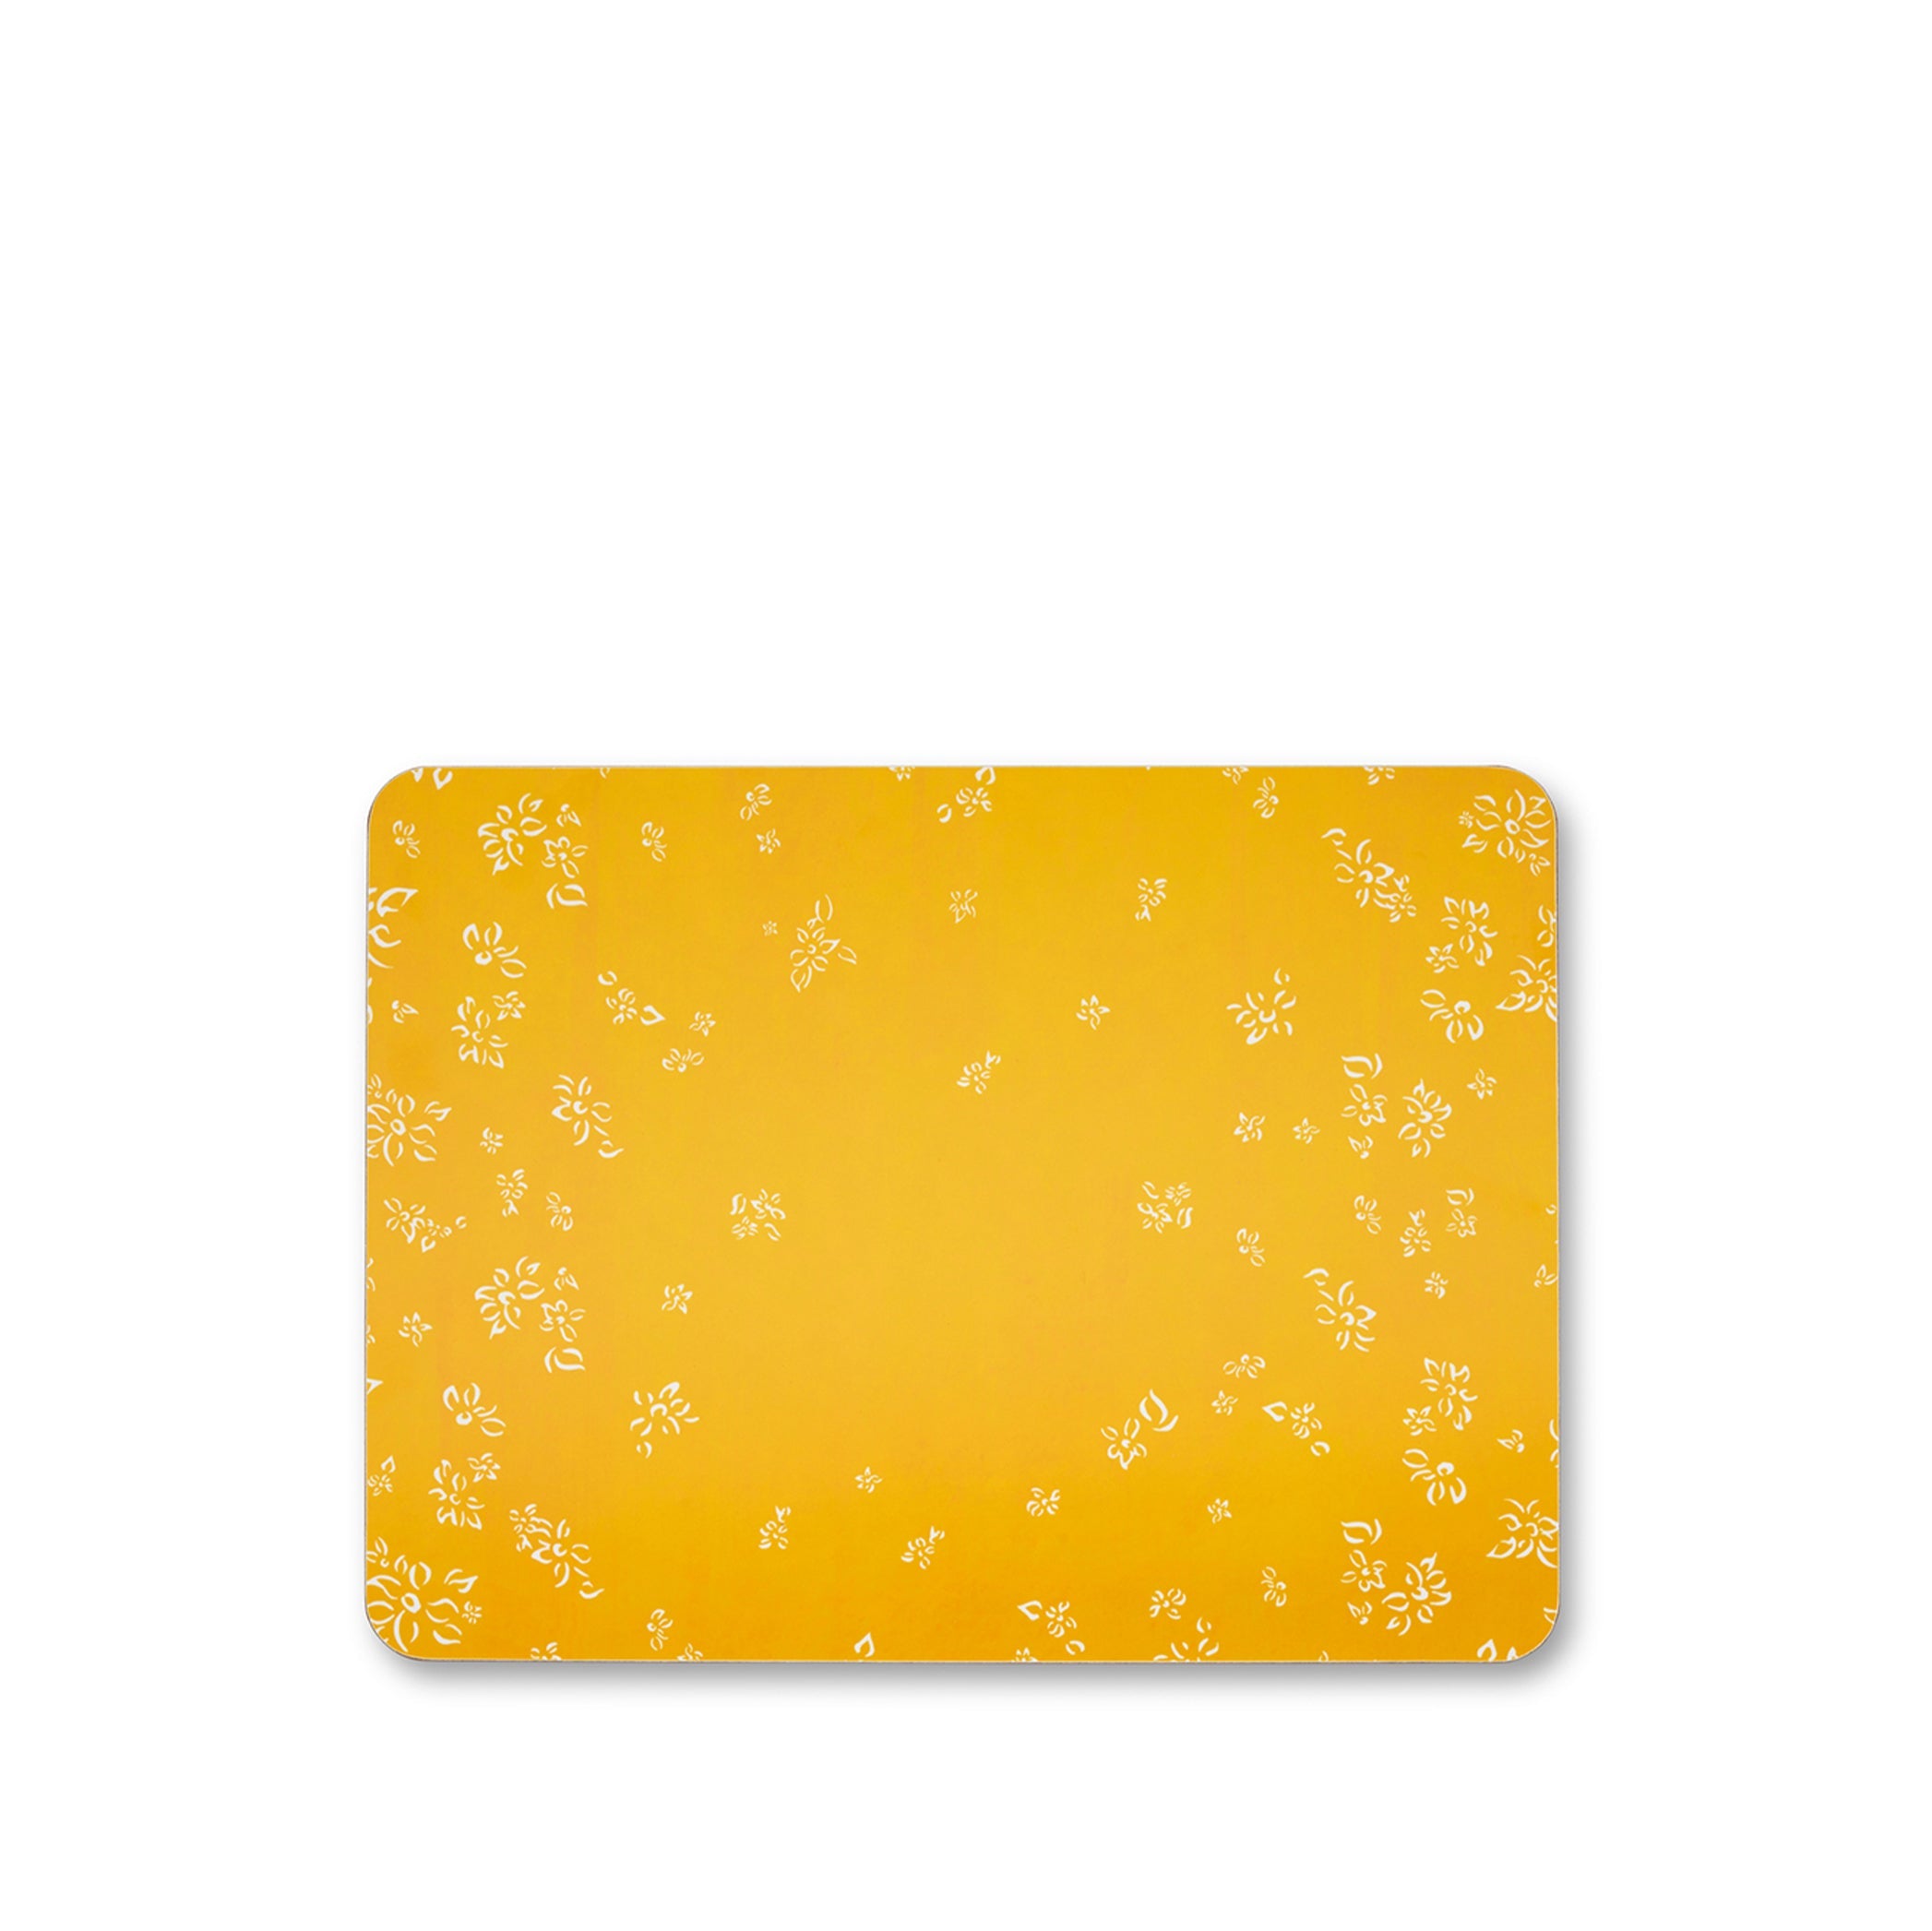 Falling Flower Cork-Backed Placemat in Lemon Yellow